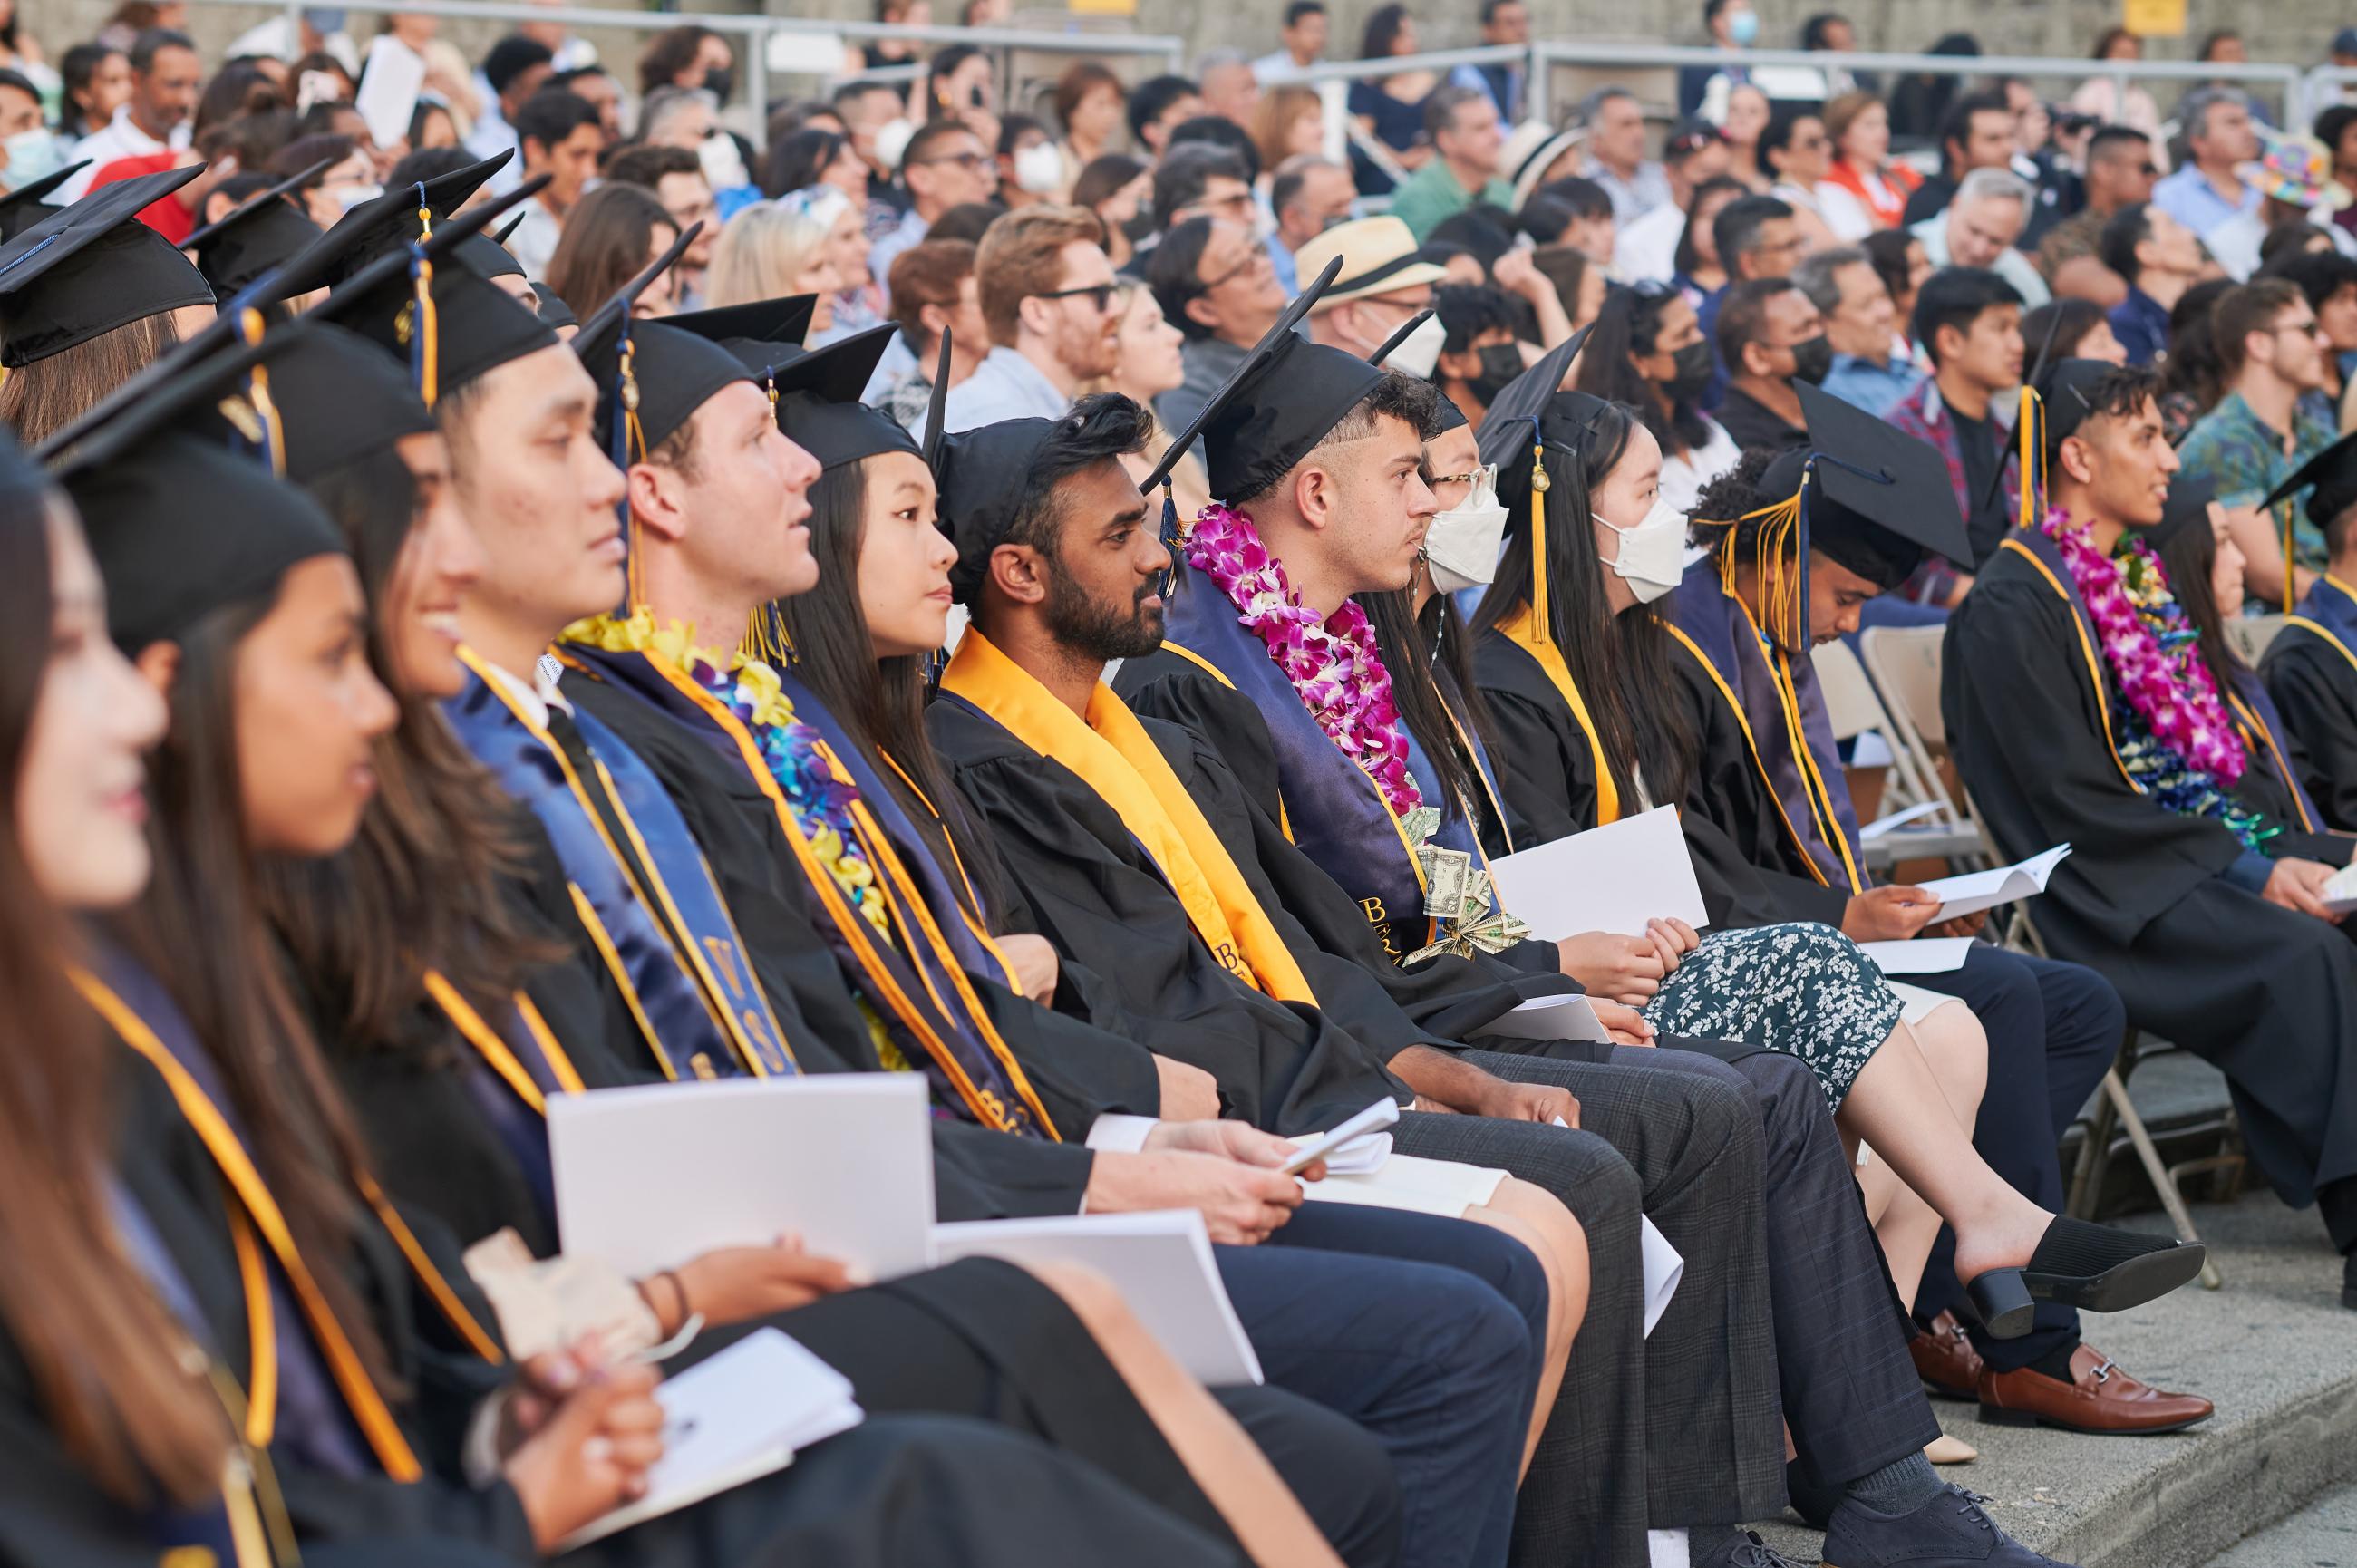 Graduates listen to Professor Emeritus David Culler's remarks. (Photo/ KLCfotos)